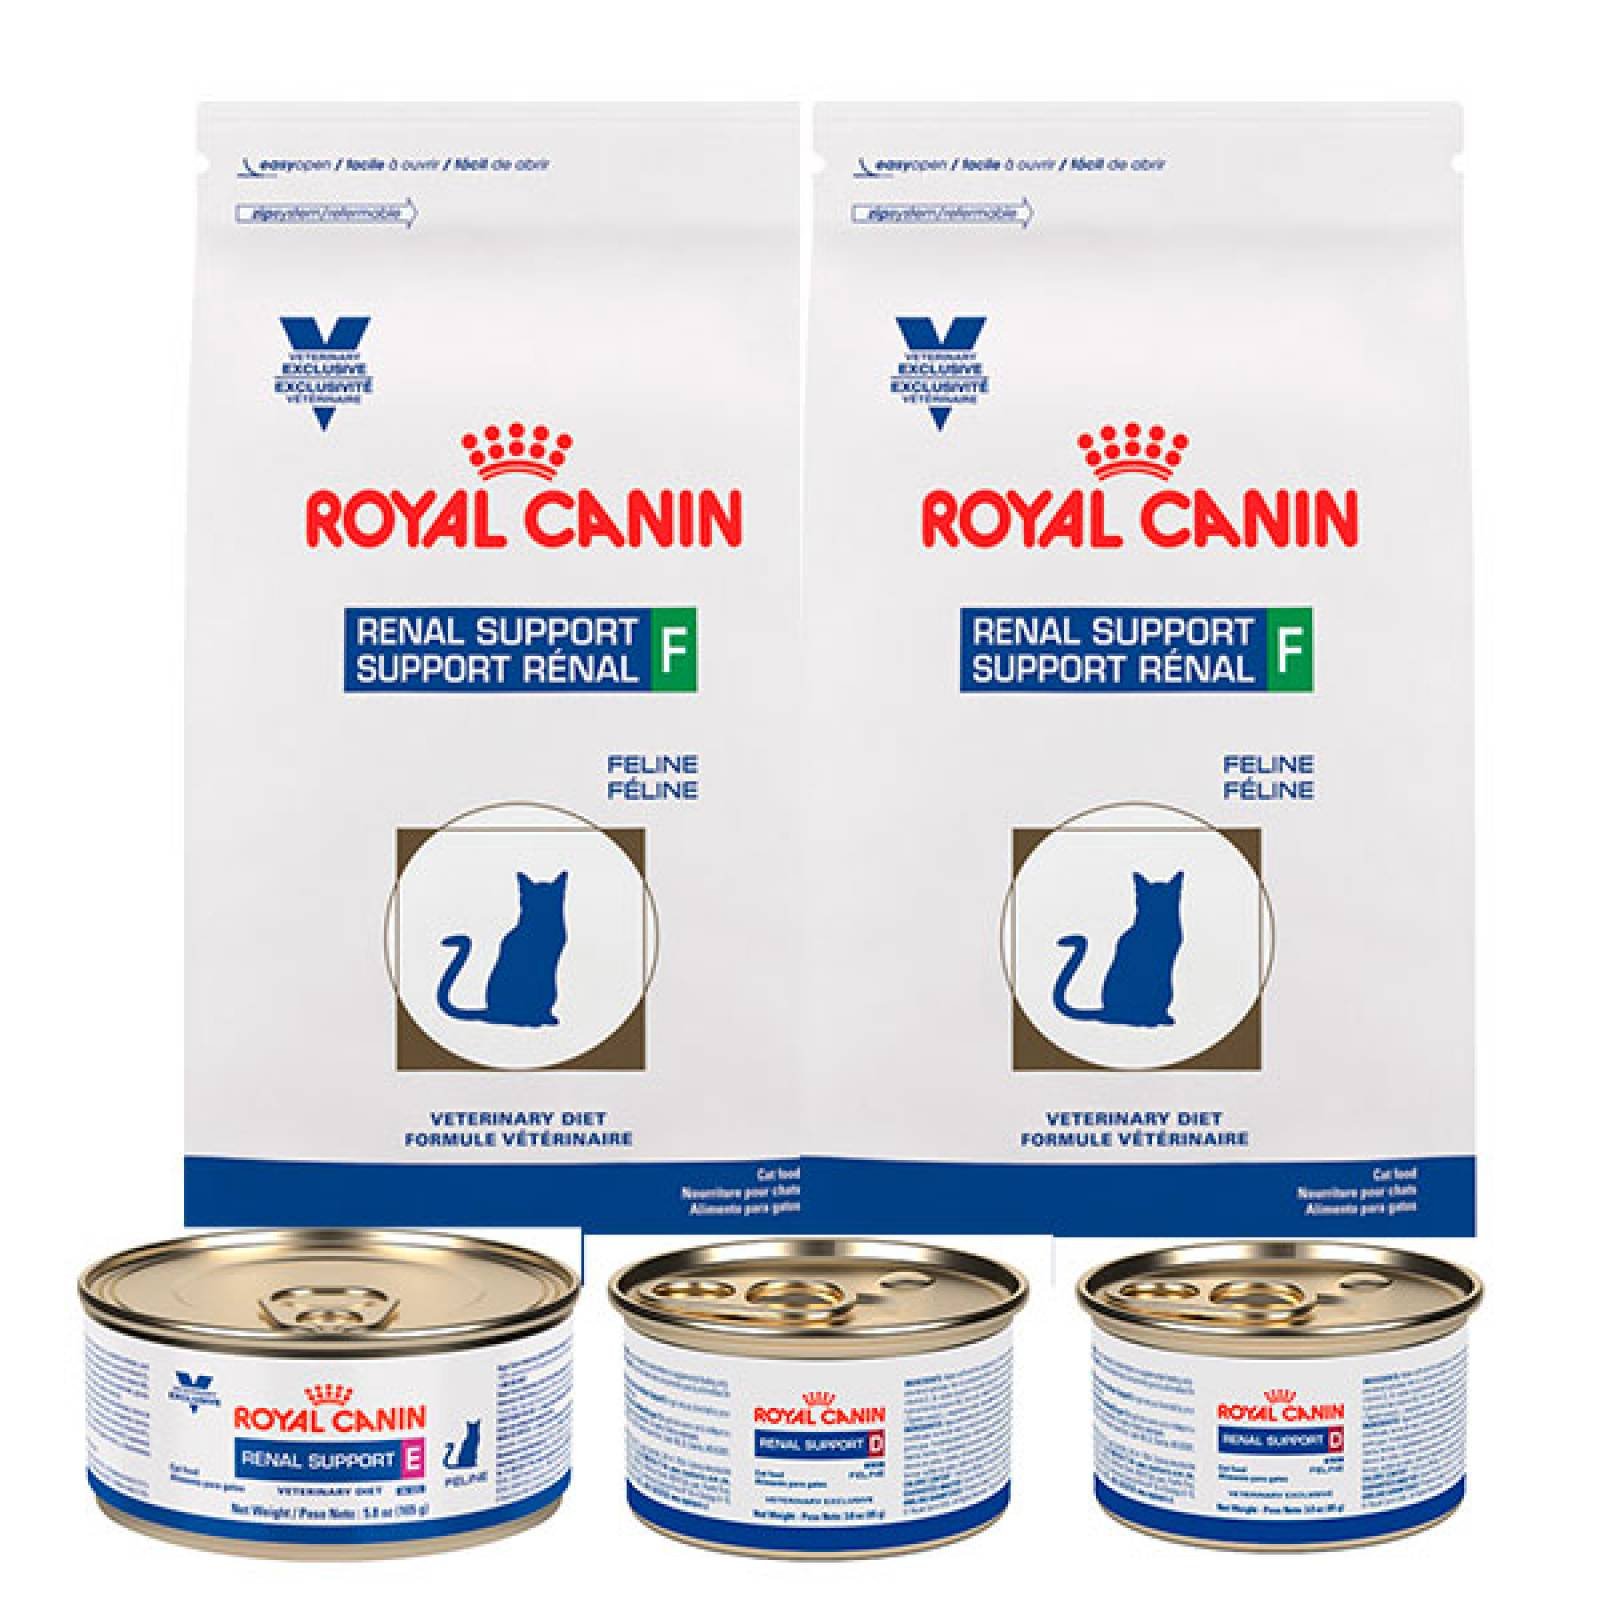 Royal canin Dieta Veterinaria Paquete de alimento para Gato 2 Bultos de Soporte Renal F 3 Kg c/u + 1 Lata de Alimento humedo Soporte Renal E 85 gr + 2 Latas de Alimento humedo Soporte Renal D mig 165 gr